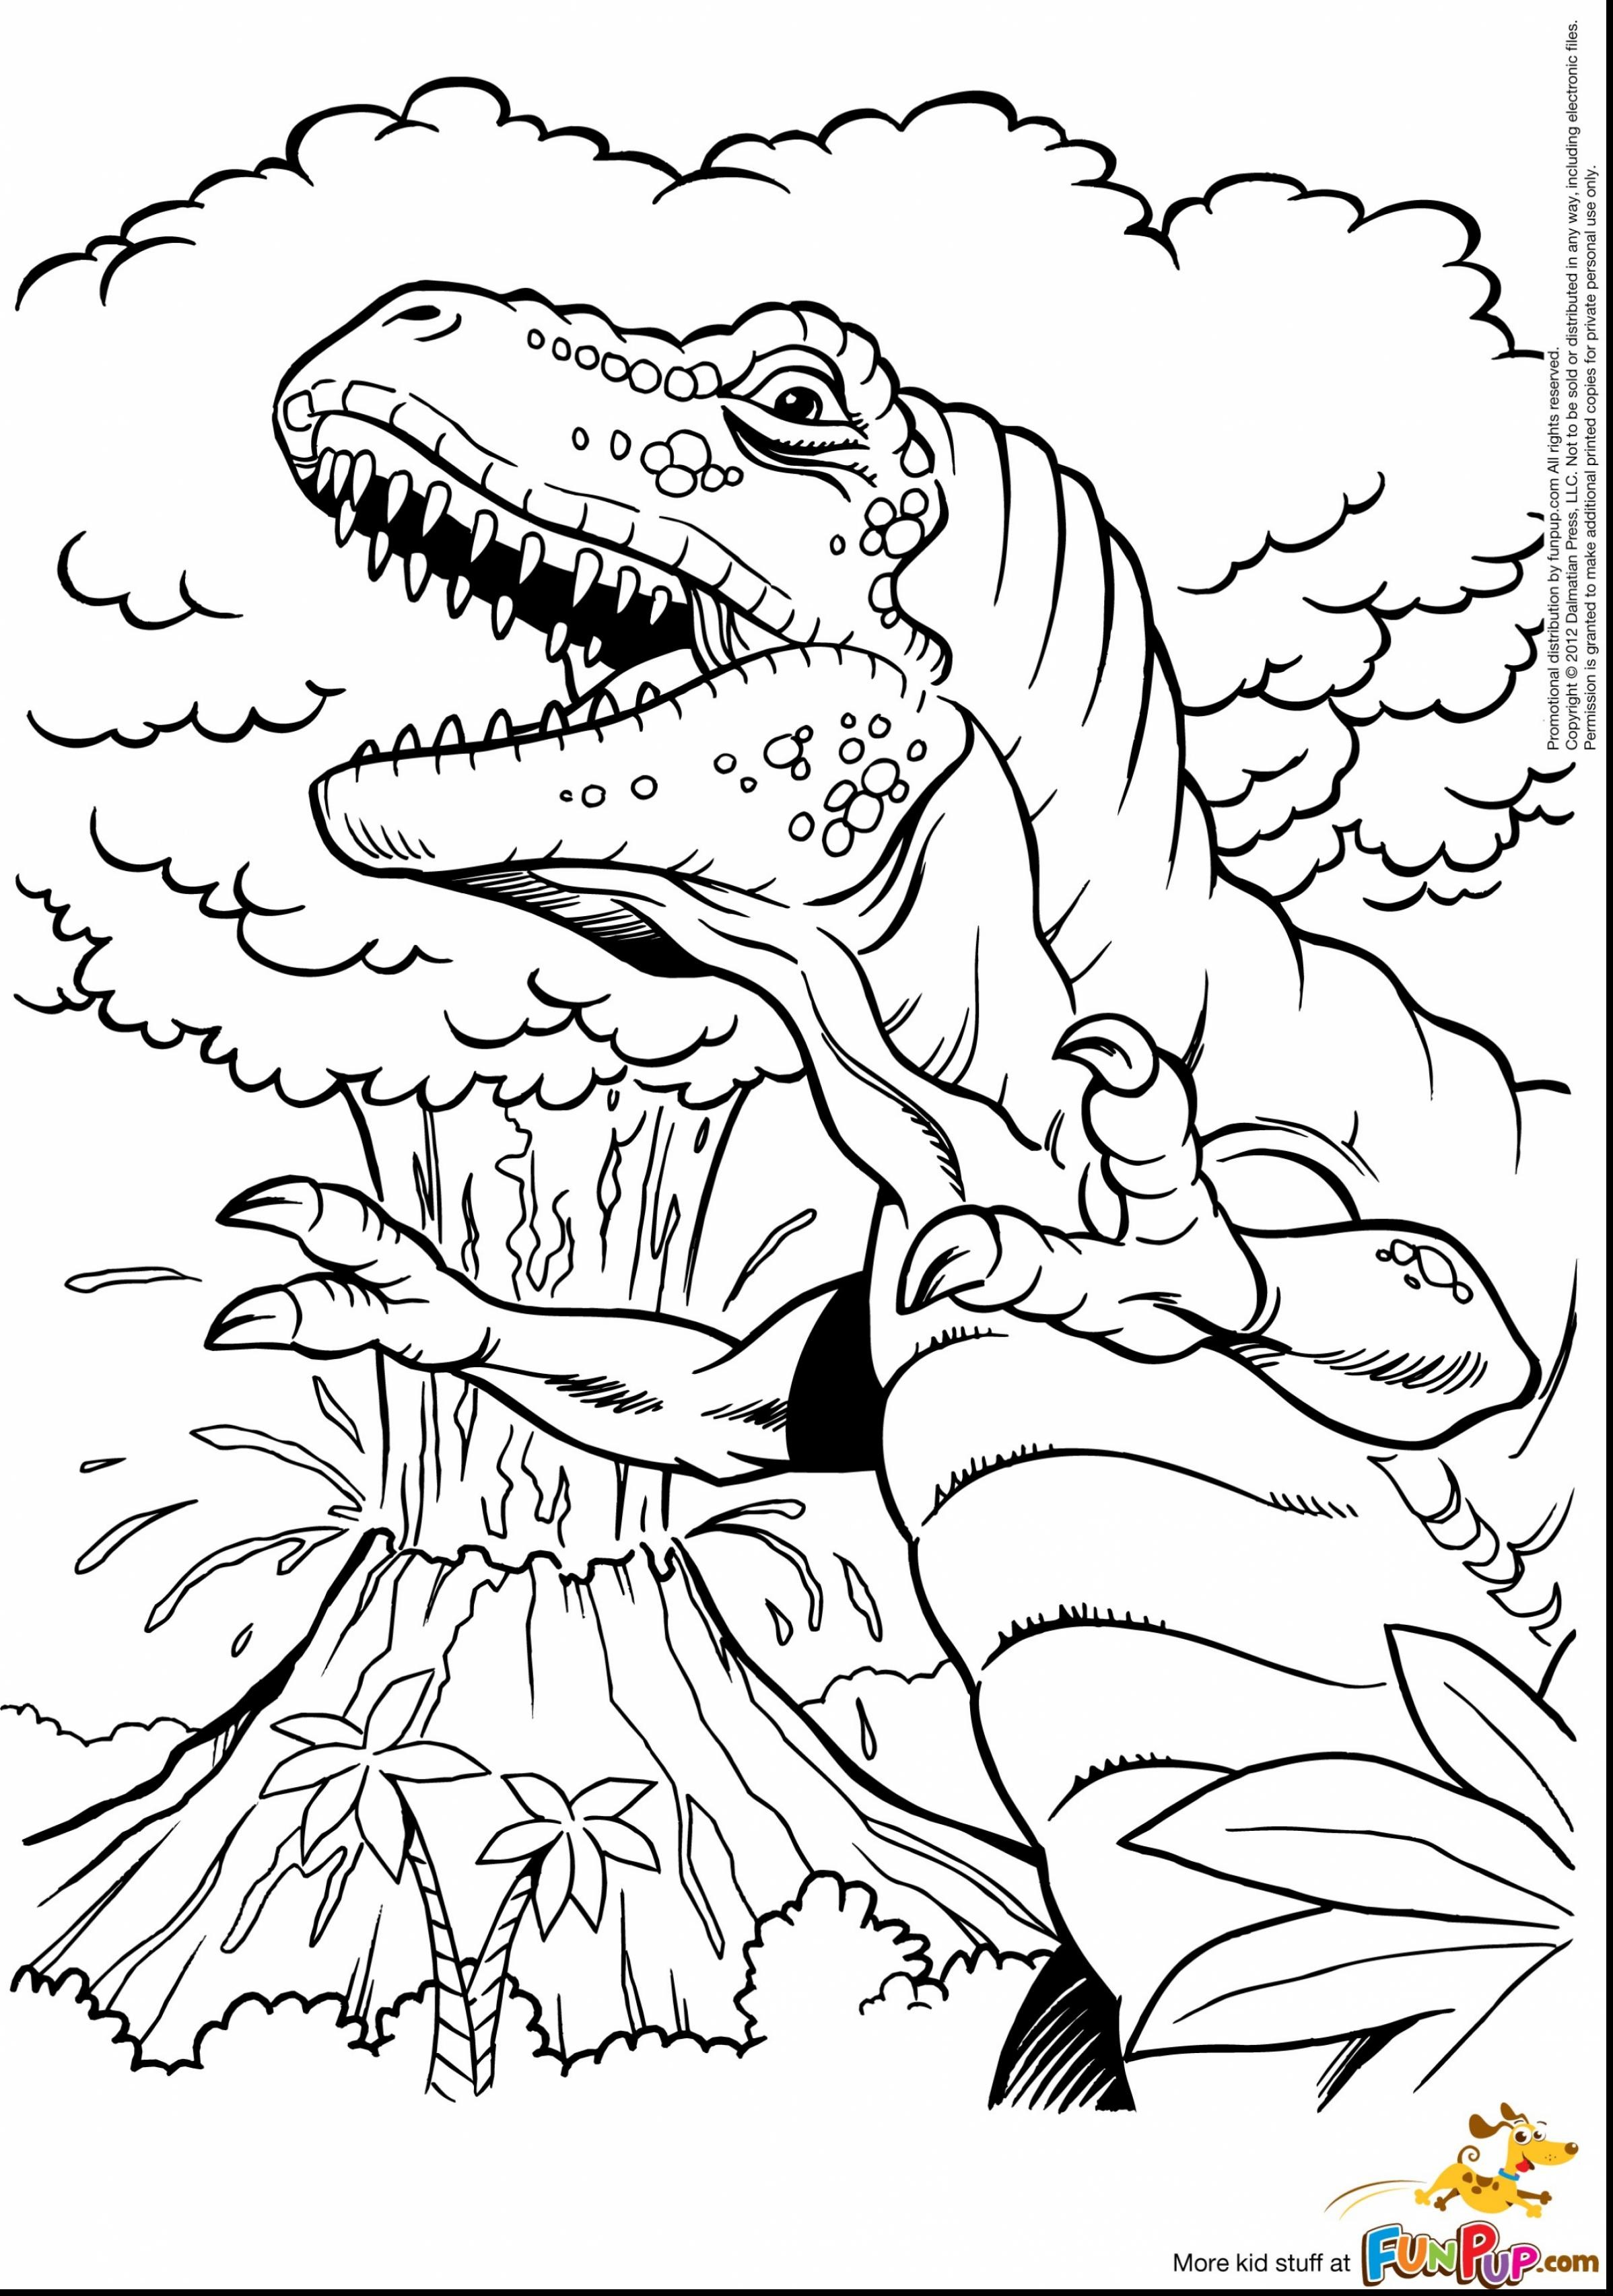 tyrannosaurus-rex-drawing-at-getdrawings-free-download